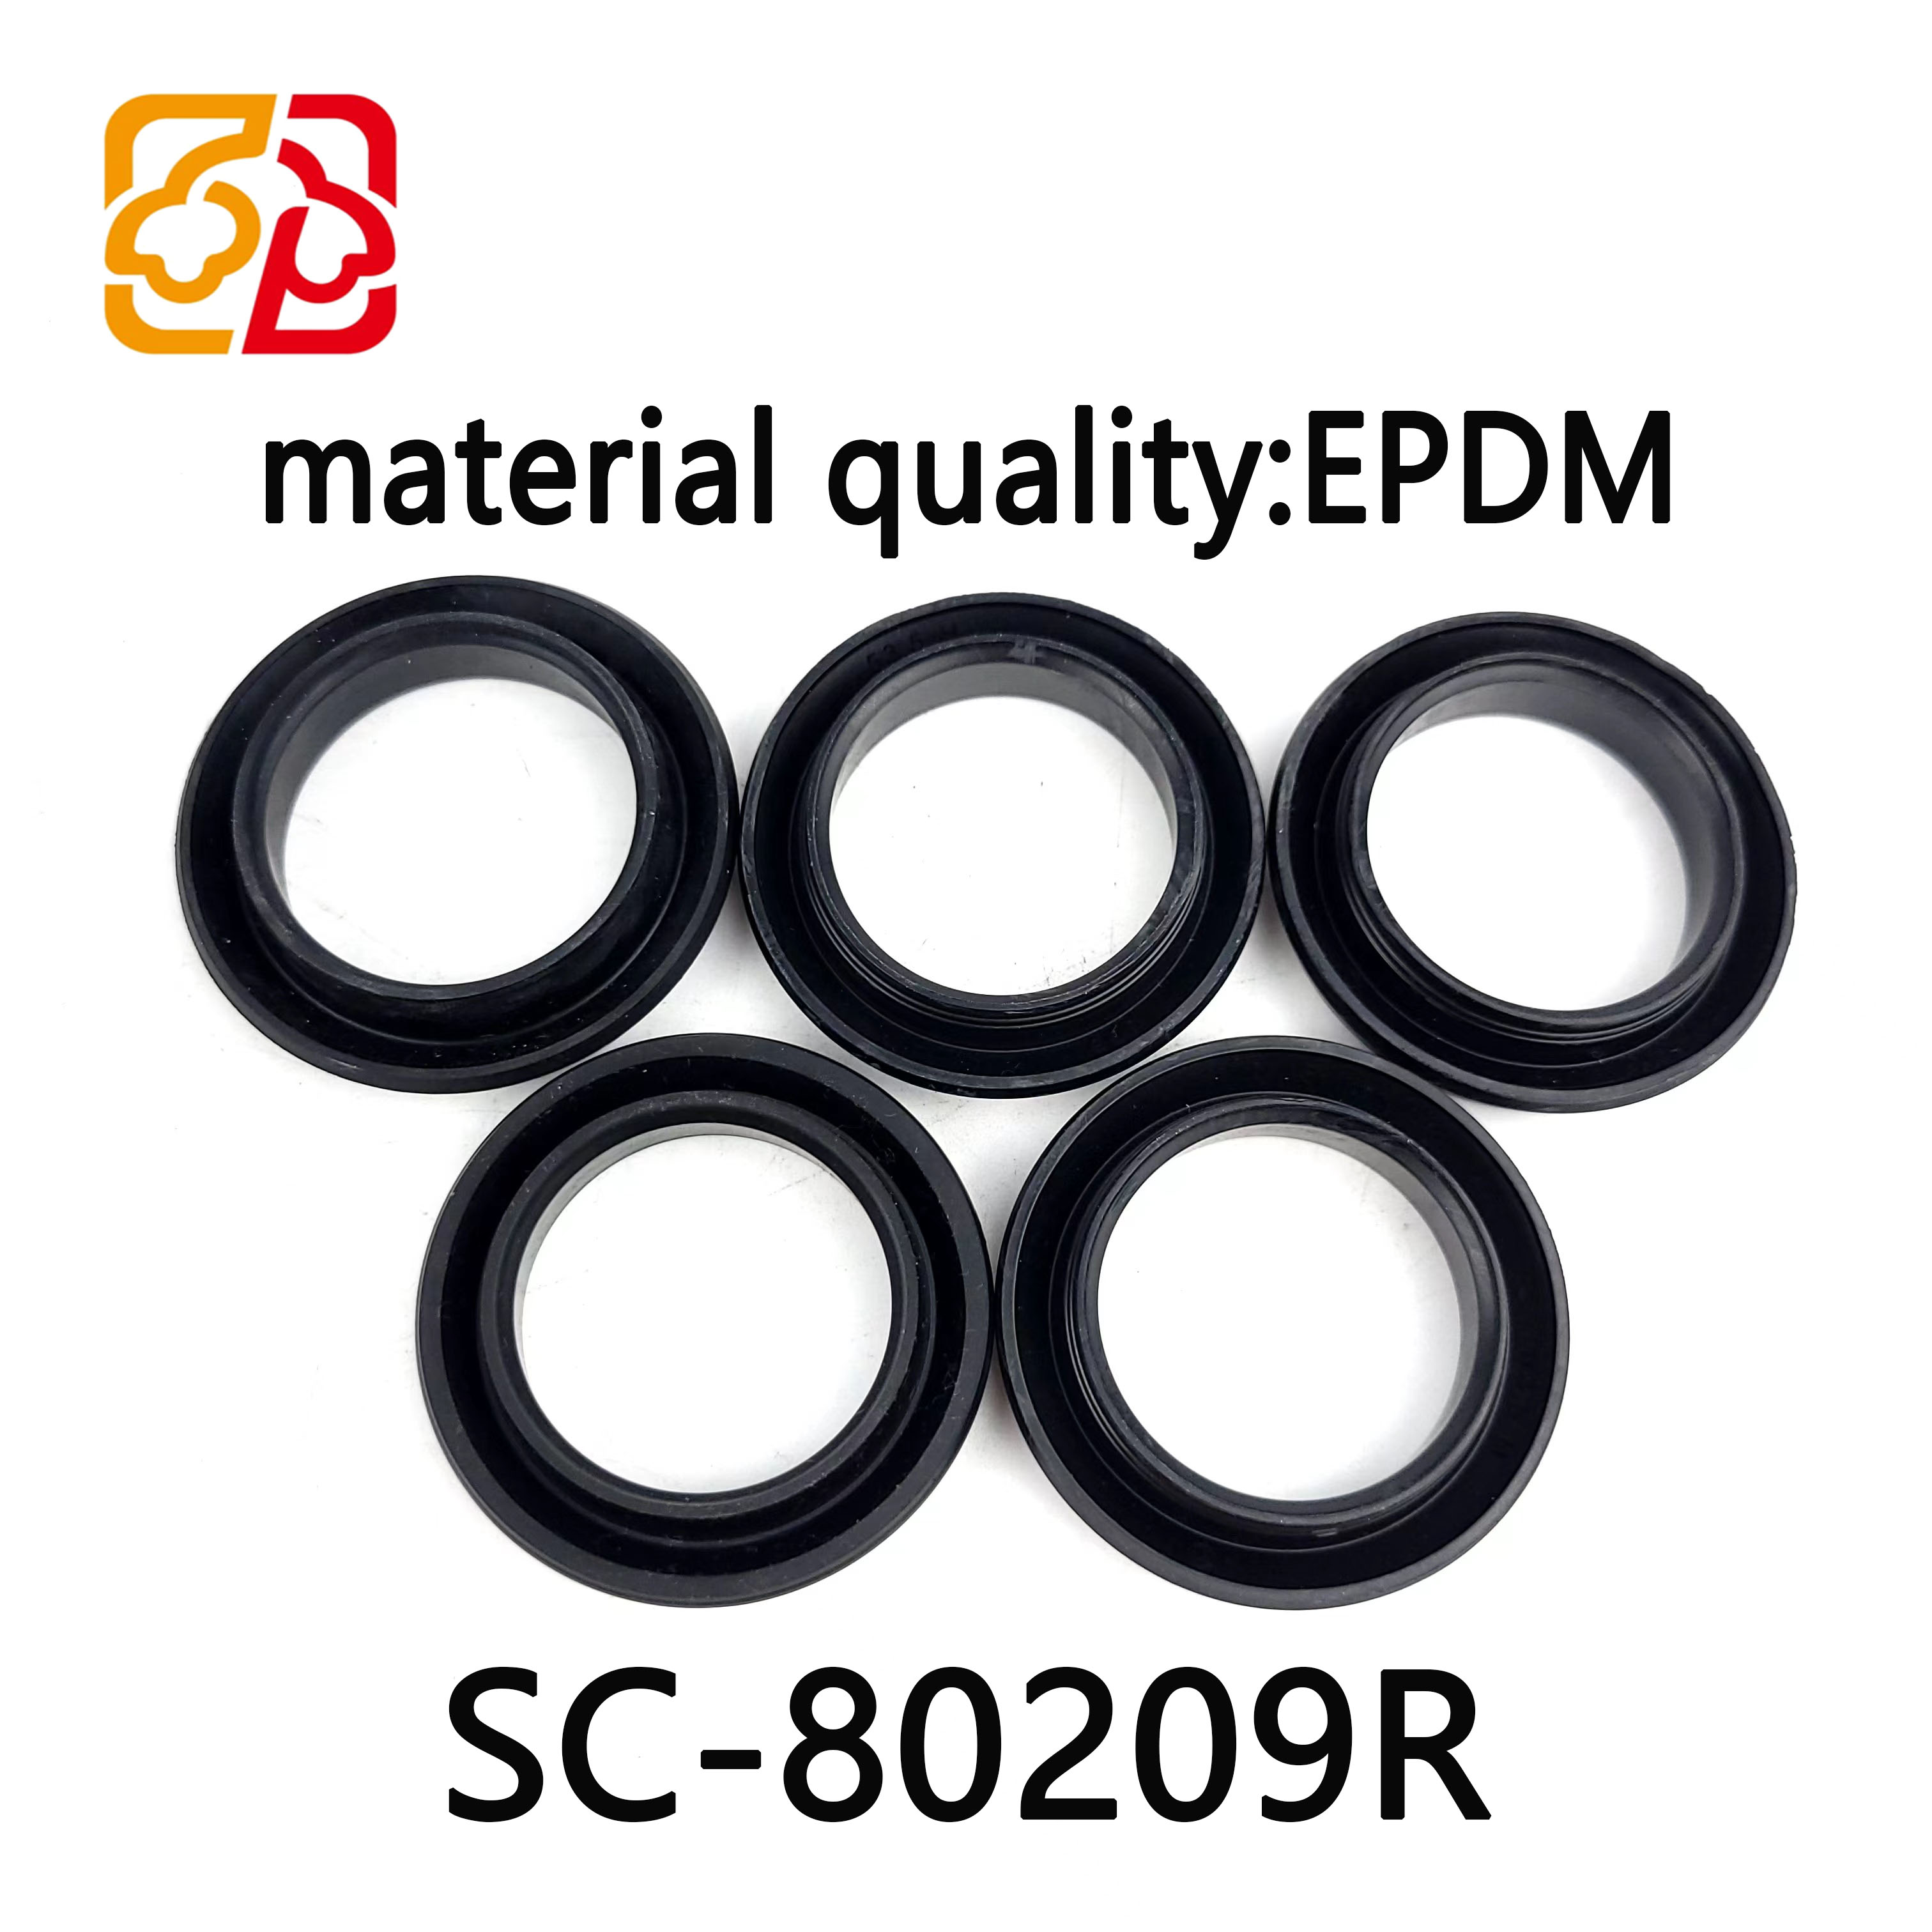 SC-80209R Hydraulic Wheel Cylinder Rubber EDPM Brake Cup Seals SC-80133 SC-80033 SC-80204 SC-4532R